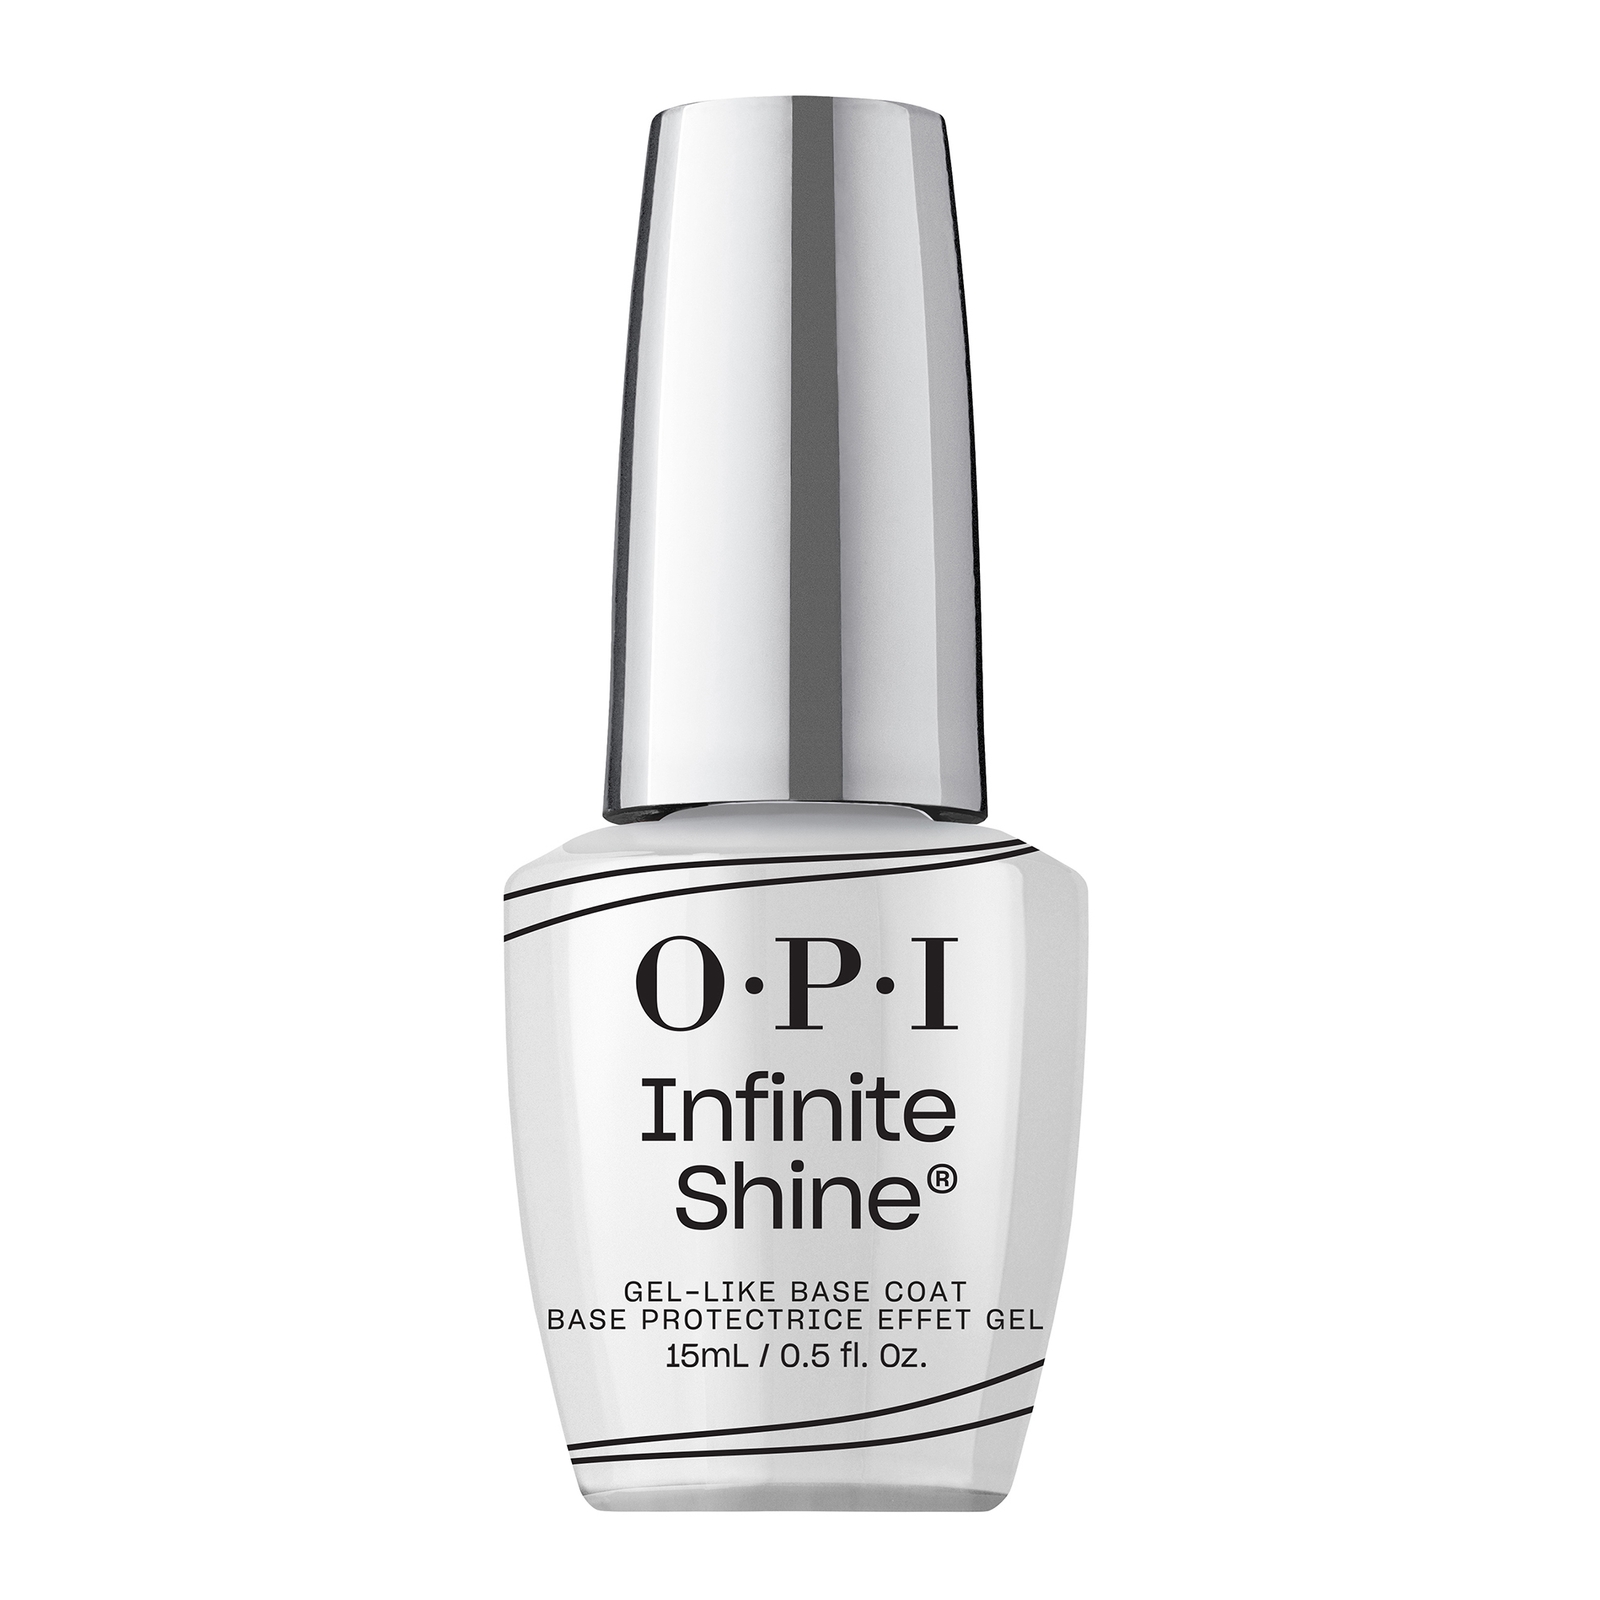 OPI Infinite Shine Long-Wear Nail Polish - Base Coat 15ml